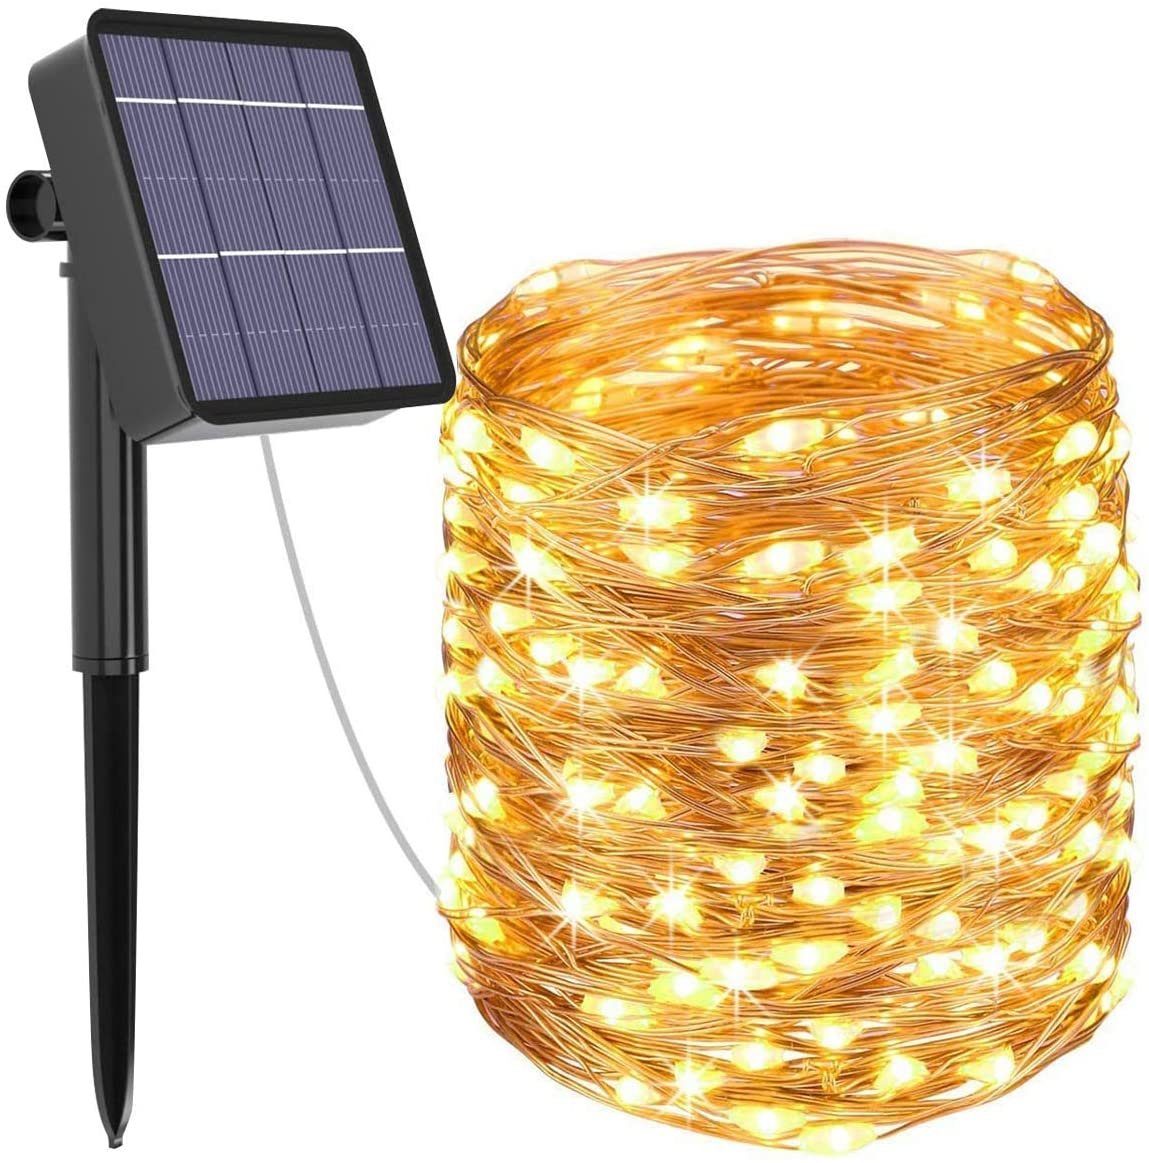 LETGOSPT LED-Lichterkette 12M 100LEDs / 22M 200LEDS LED Solarleuchte Kupferdraht Lichterkette, Wasserdicht IP65 PVC-Draht Beleuchtung Dekoration Warmweiß